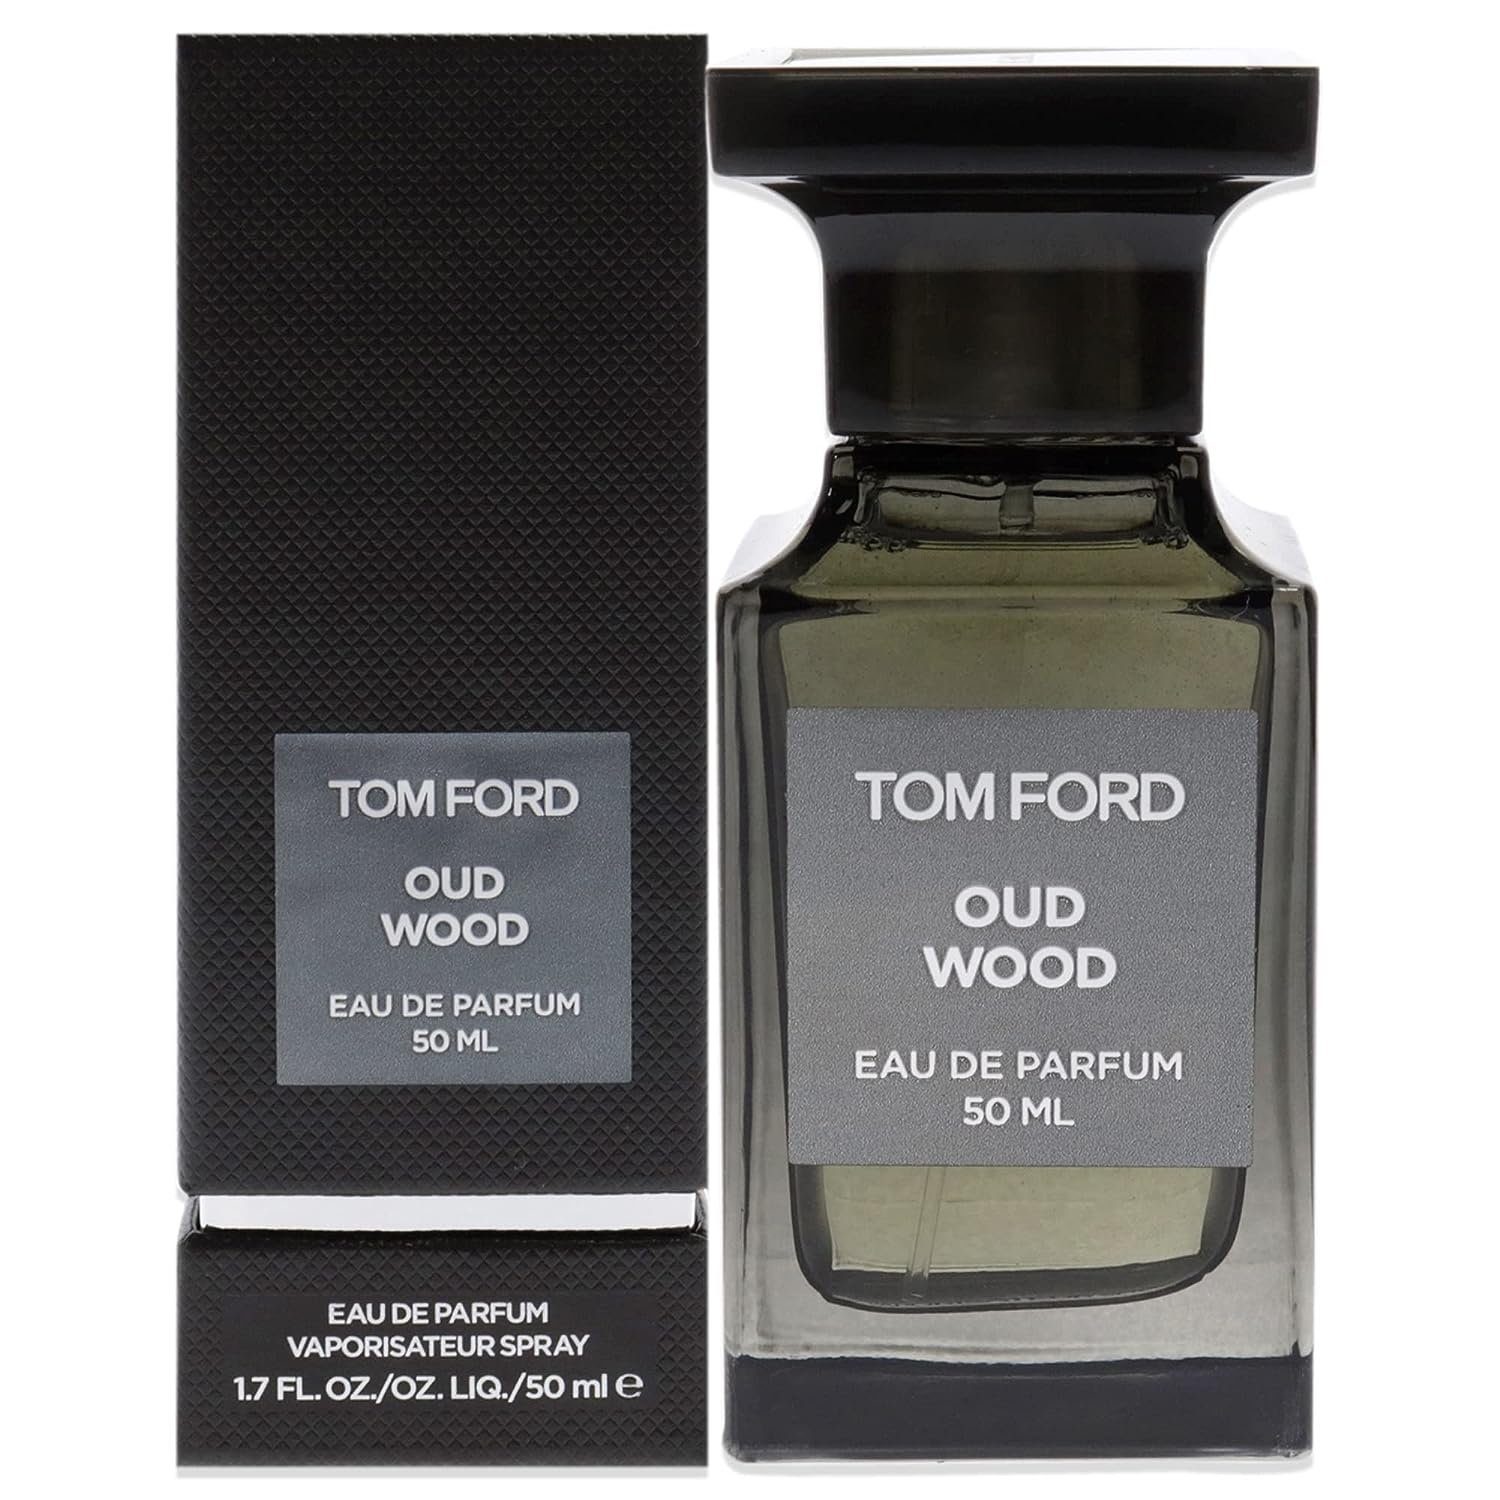 Tom Ford Eau de Parfum Oud Wood 50ml